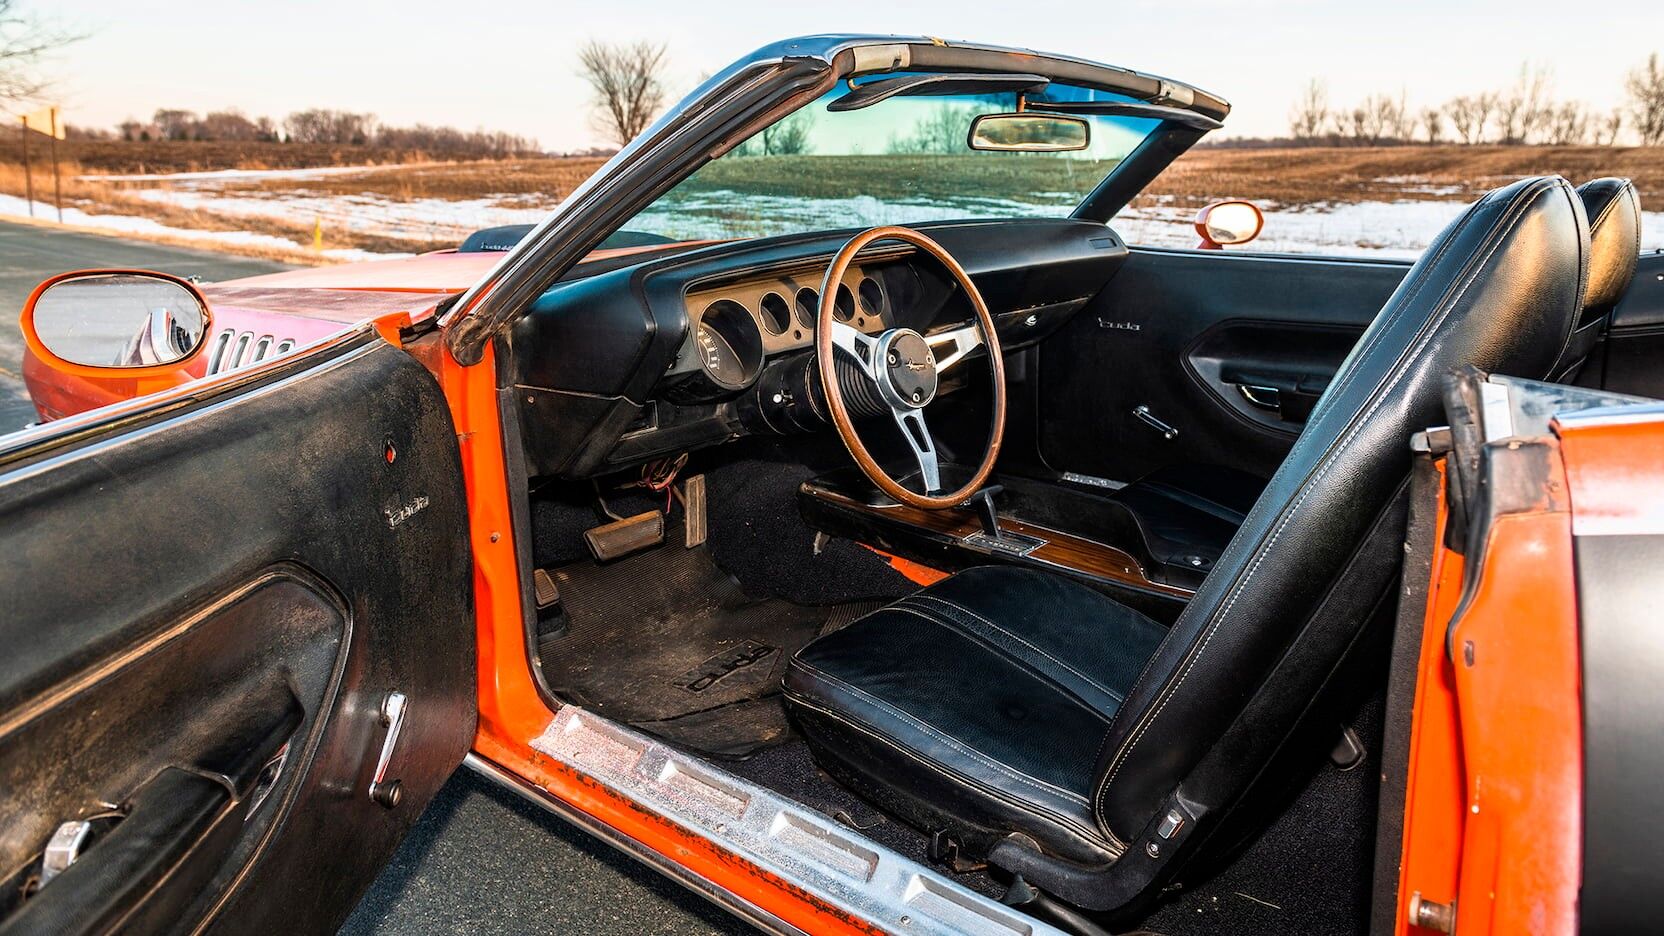 Салон Plymouth Cuda спустя 35 лет сохранился очень хорошо.